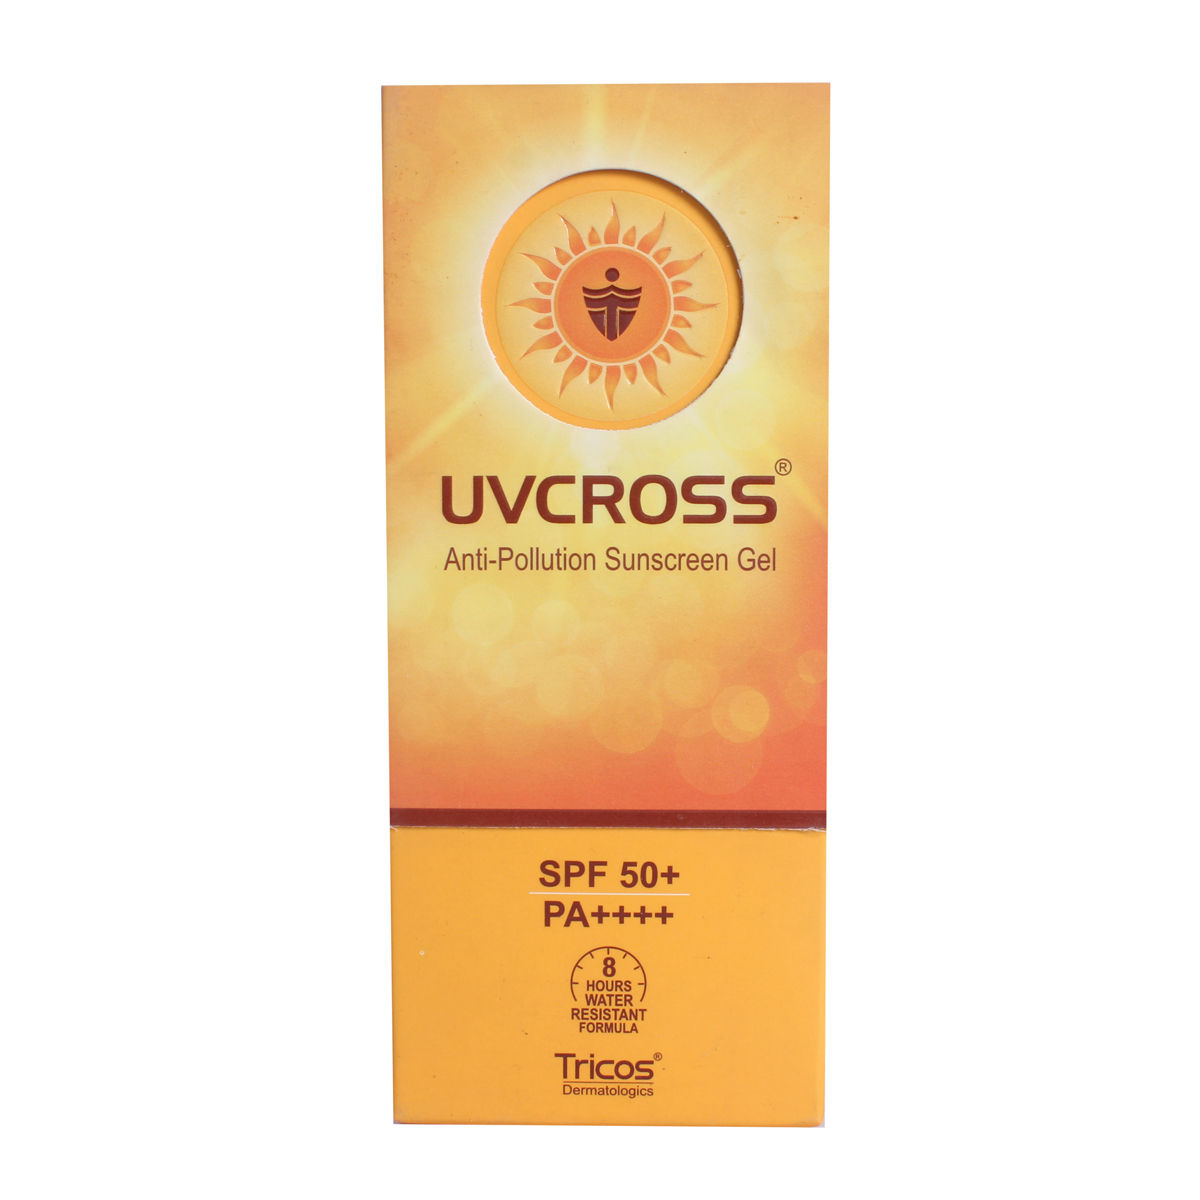 Buy Uvcross SPF 50+ Anti-Pollution Sunscreen Gel 50 gm Online